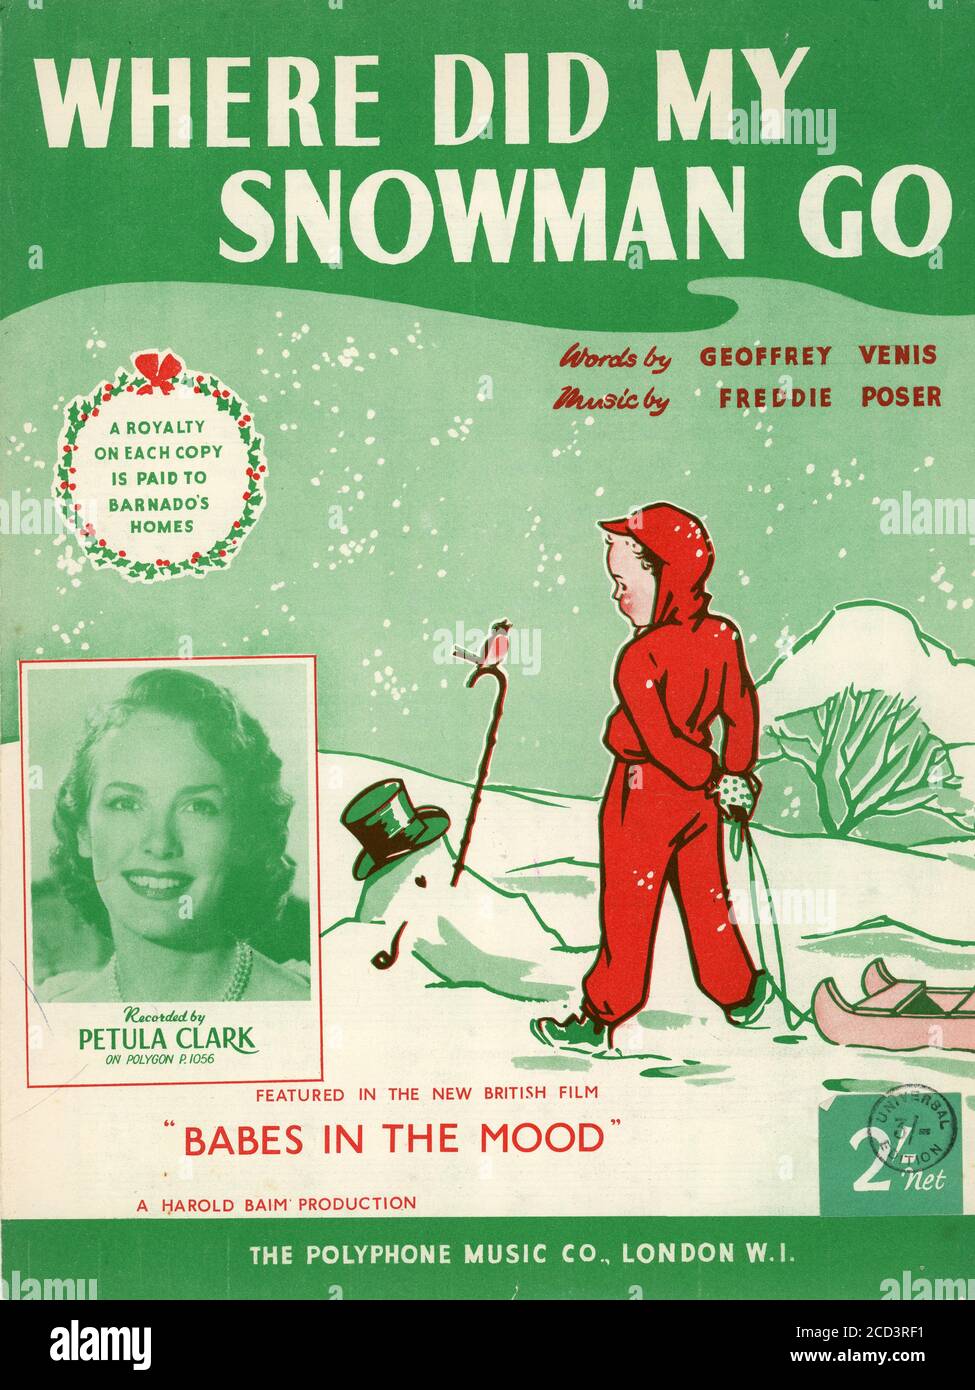 Sheet Music - Where did my snowman go - Petula Clark - 1952 Stock Photo